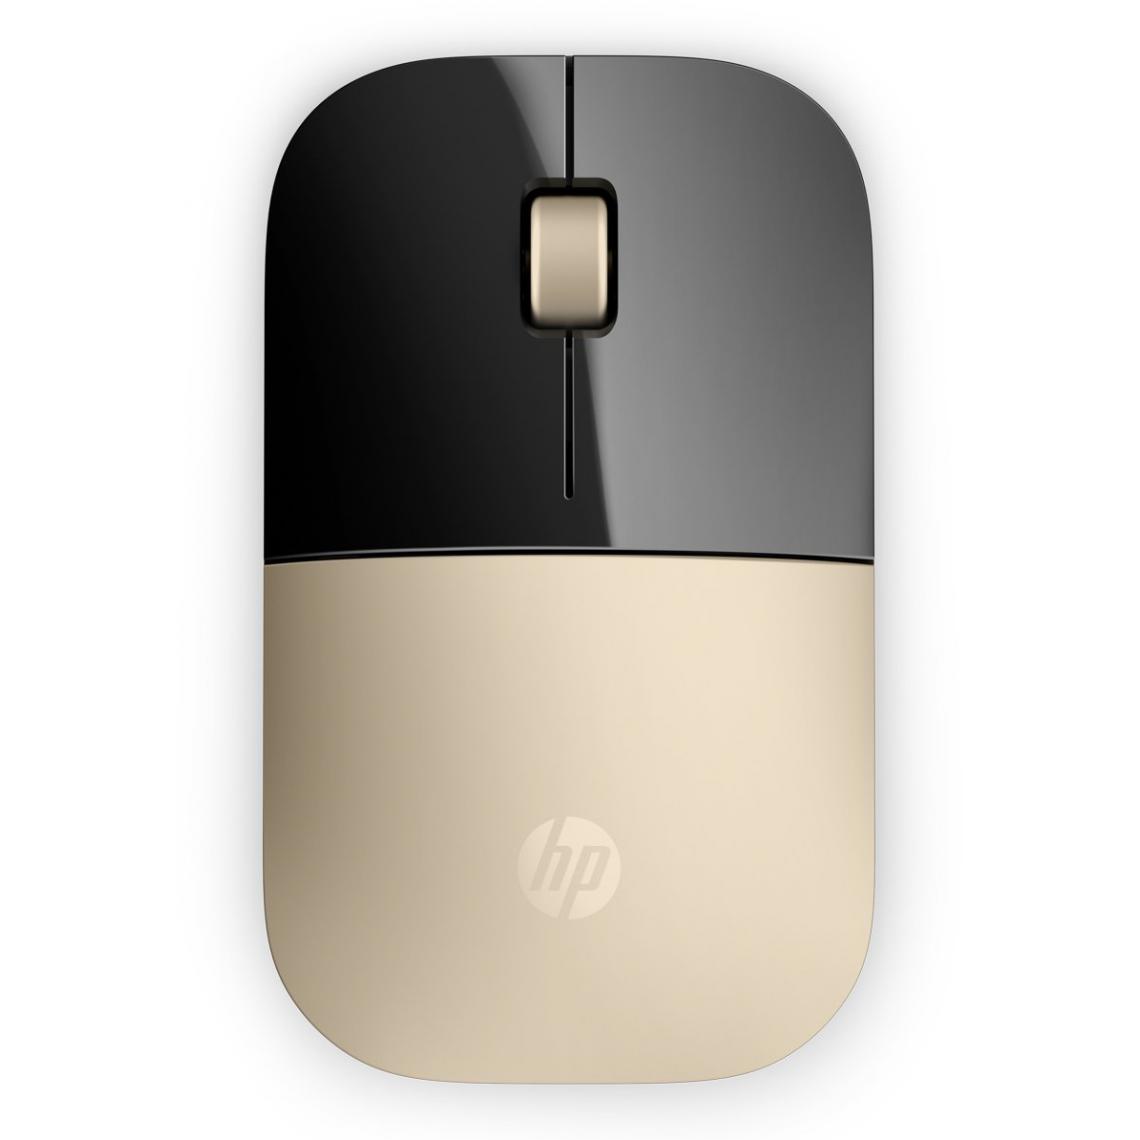 Hp - HP Z3700 - Souris Sans Fil Or (USB, 1200 DPI, Ambidextre) - Souris